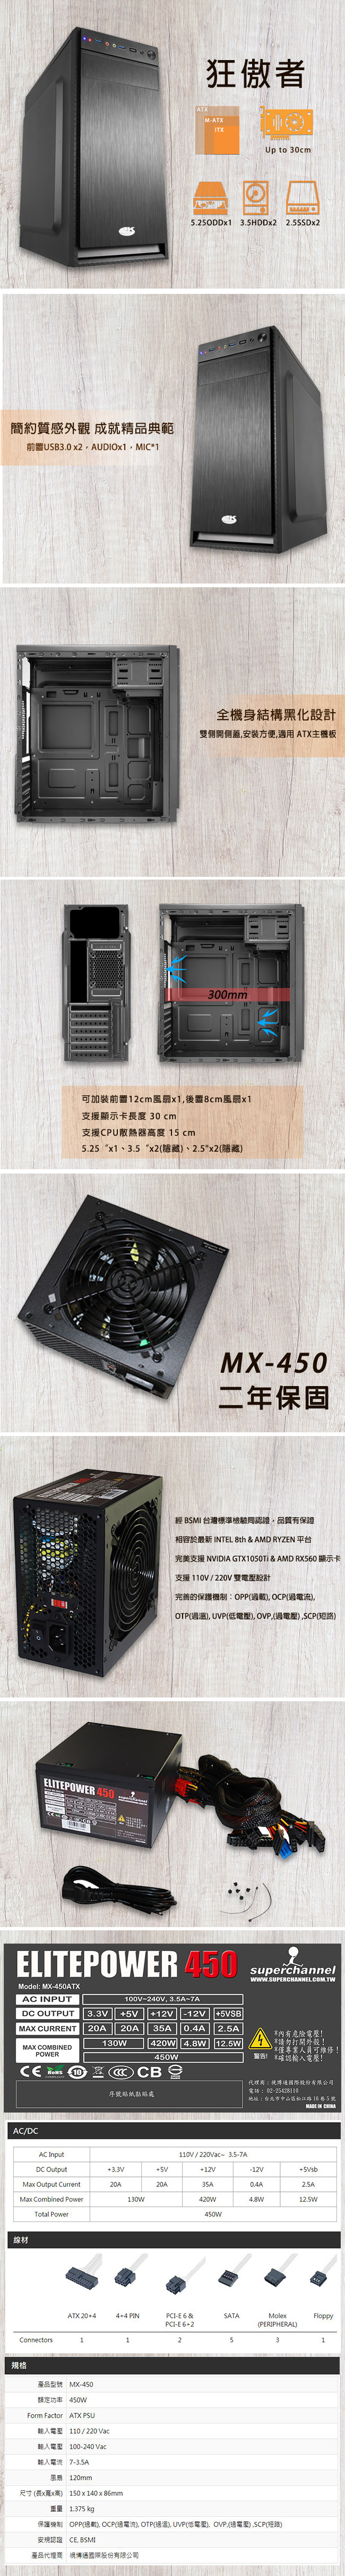 Superchannel視博通 狂傲者 電腦機殼 + MX450 450W 電源供應器